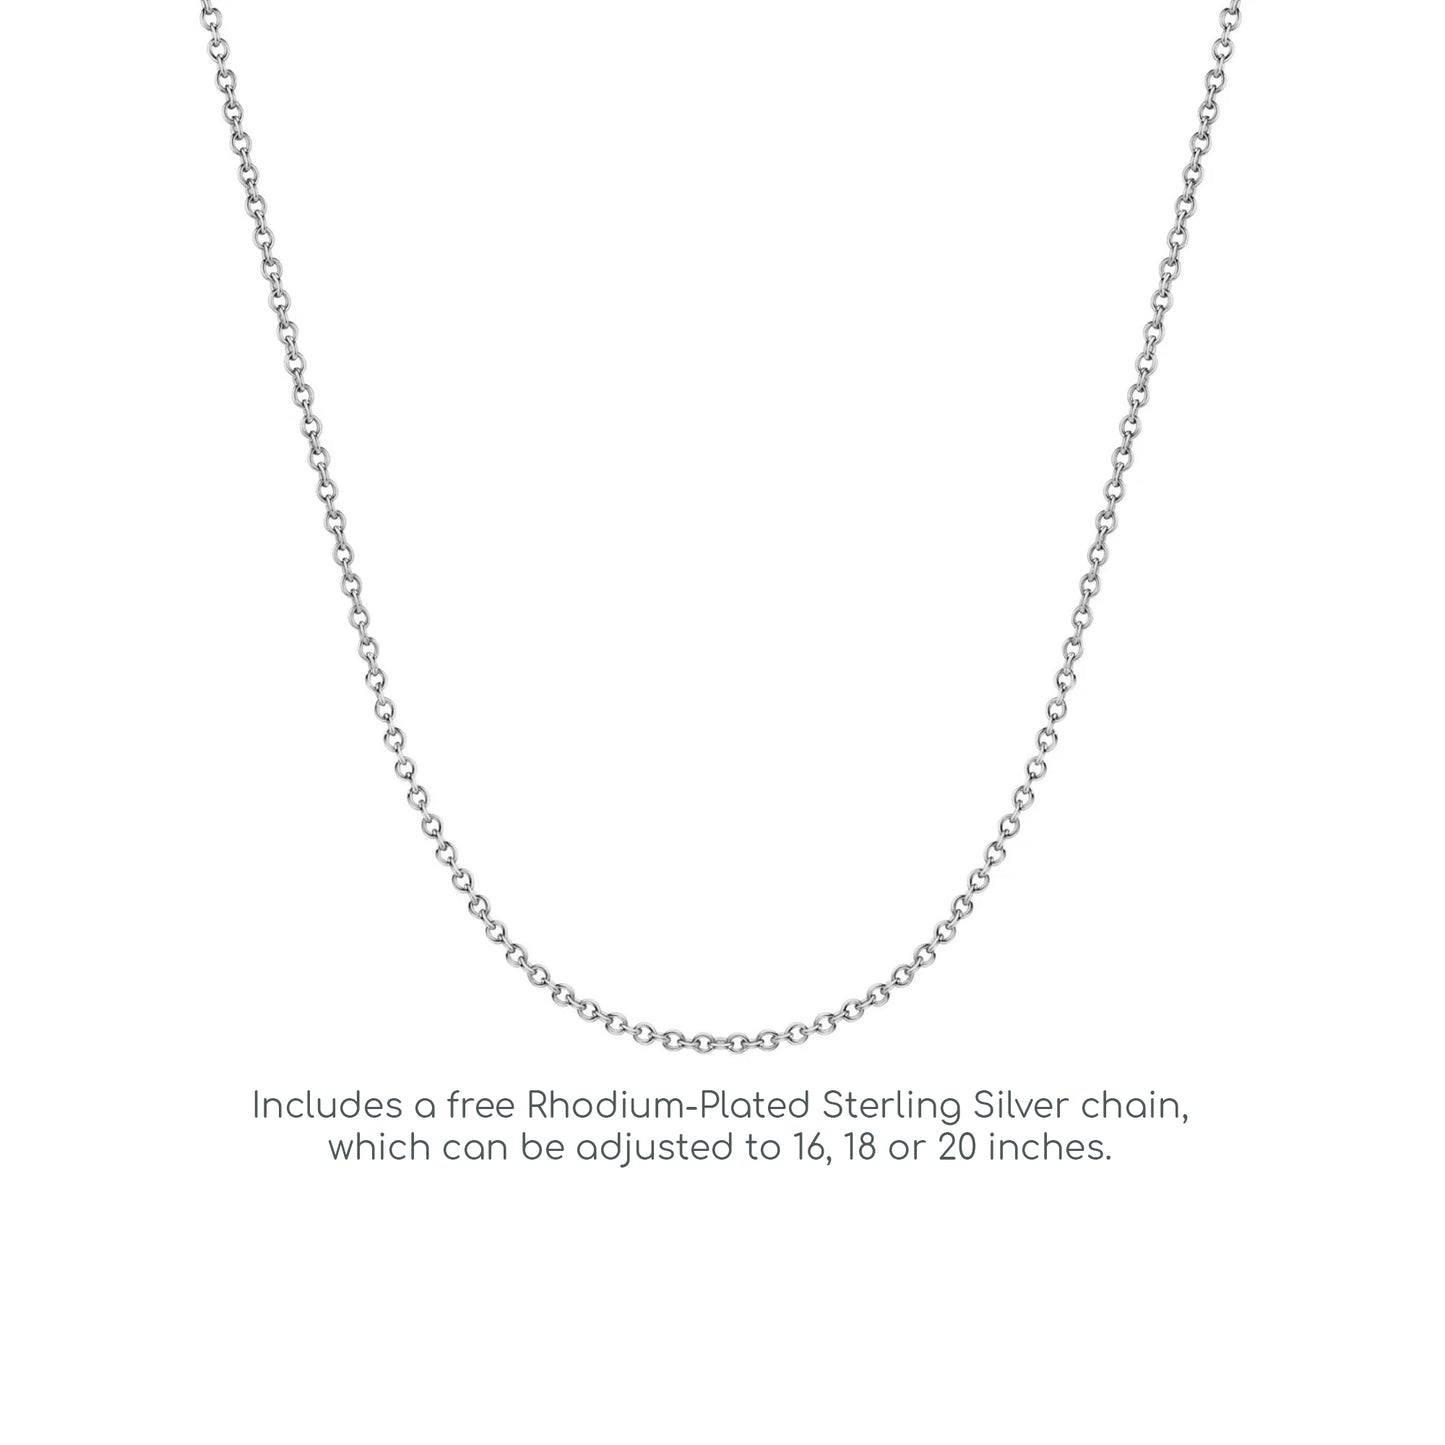 Silver  Elongated Rock Candy Pendant Necklace - GVP579SAP